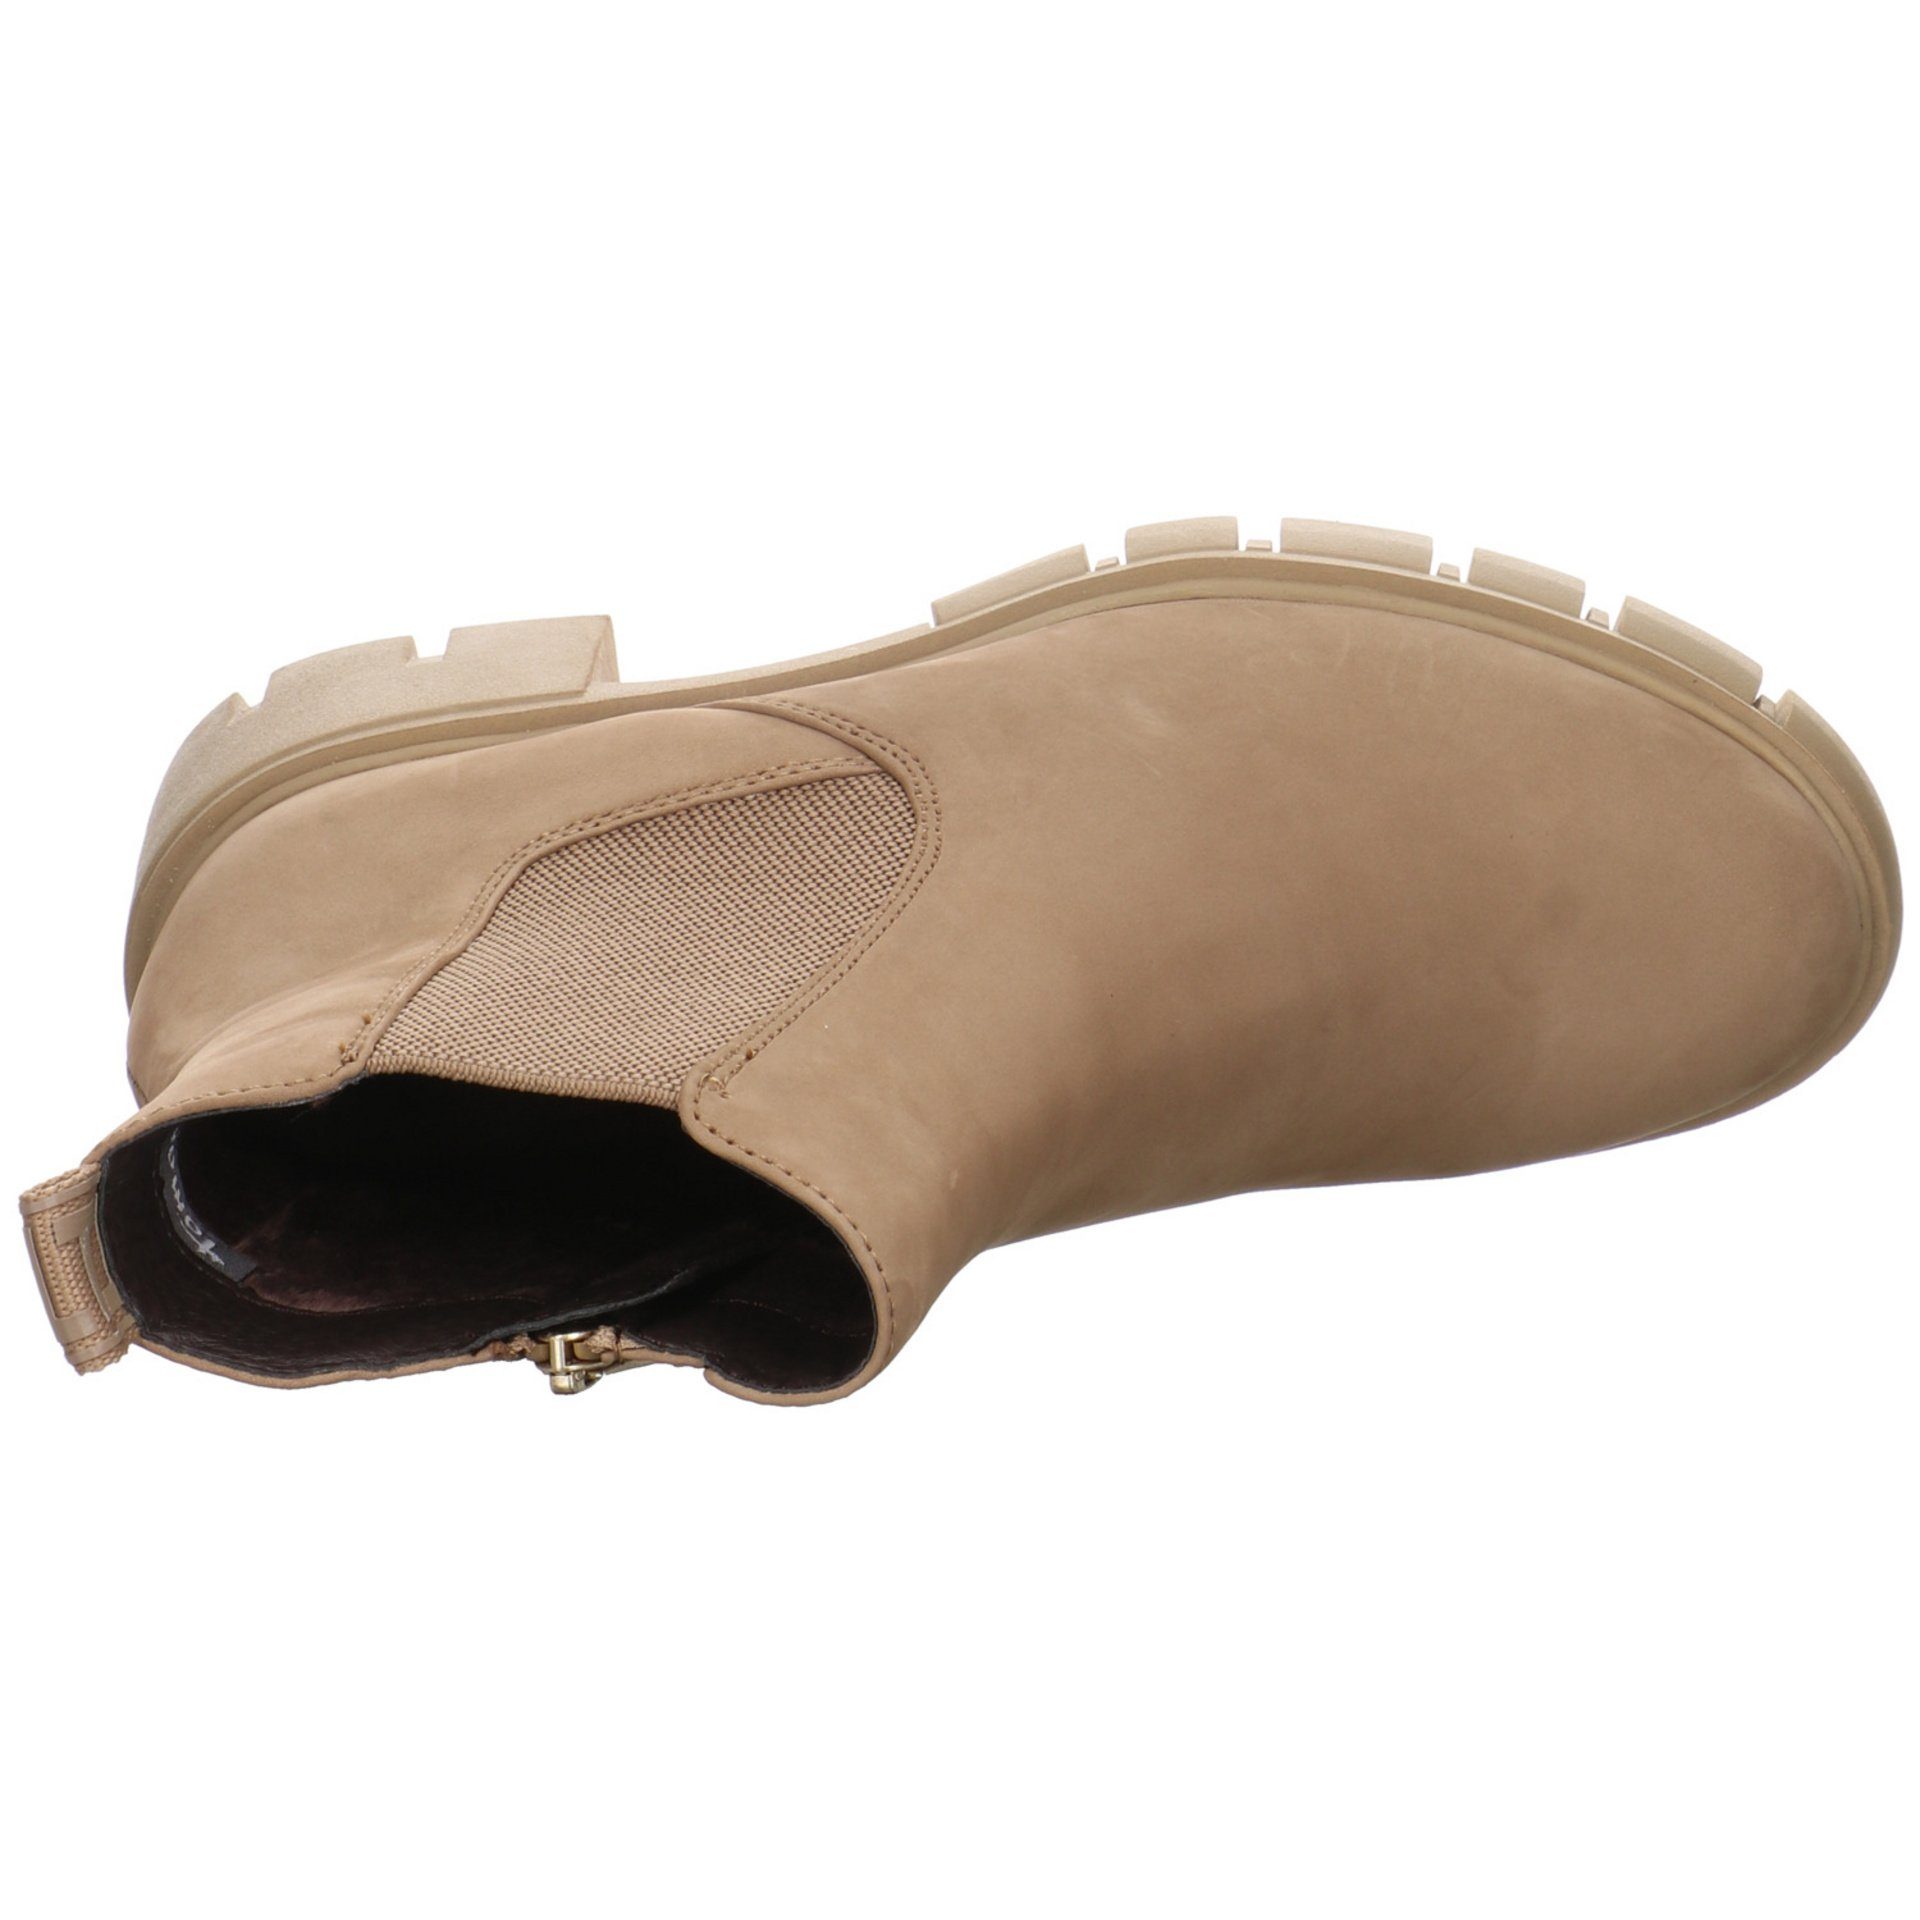 Tamaris Damen (21203969) Stiefeletten Beige Leder-/Textilkombination Schuhe Stiefelette Chelsea Boots